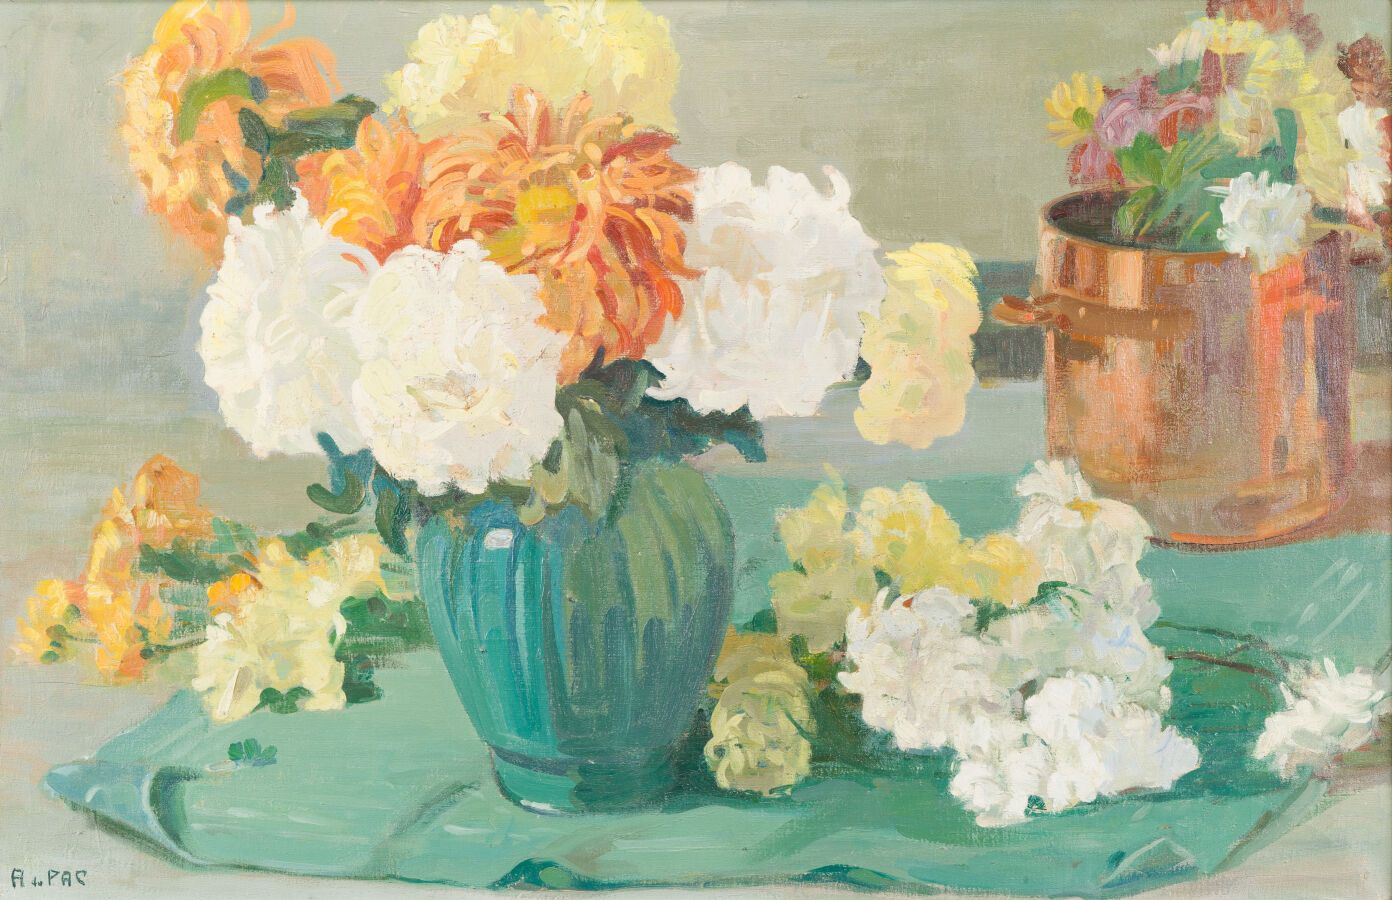 Null 161.安德烈-杜帕克 (1891 - 1966)

一束花

布面油画，左下方有签名。

64 x 100厘米。